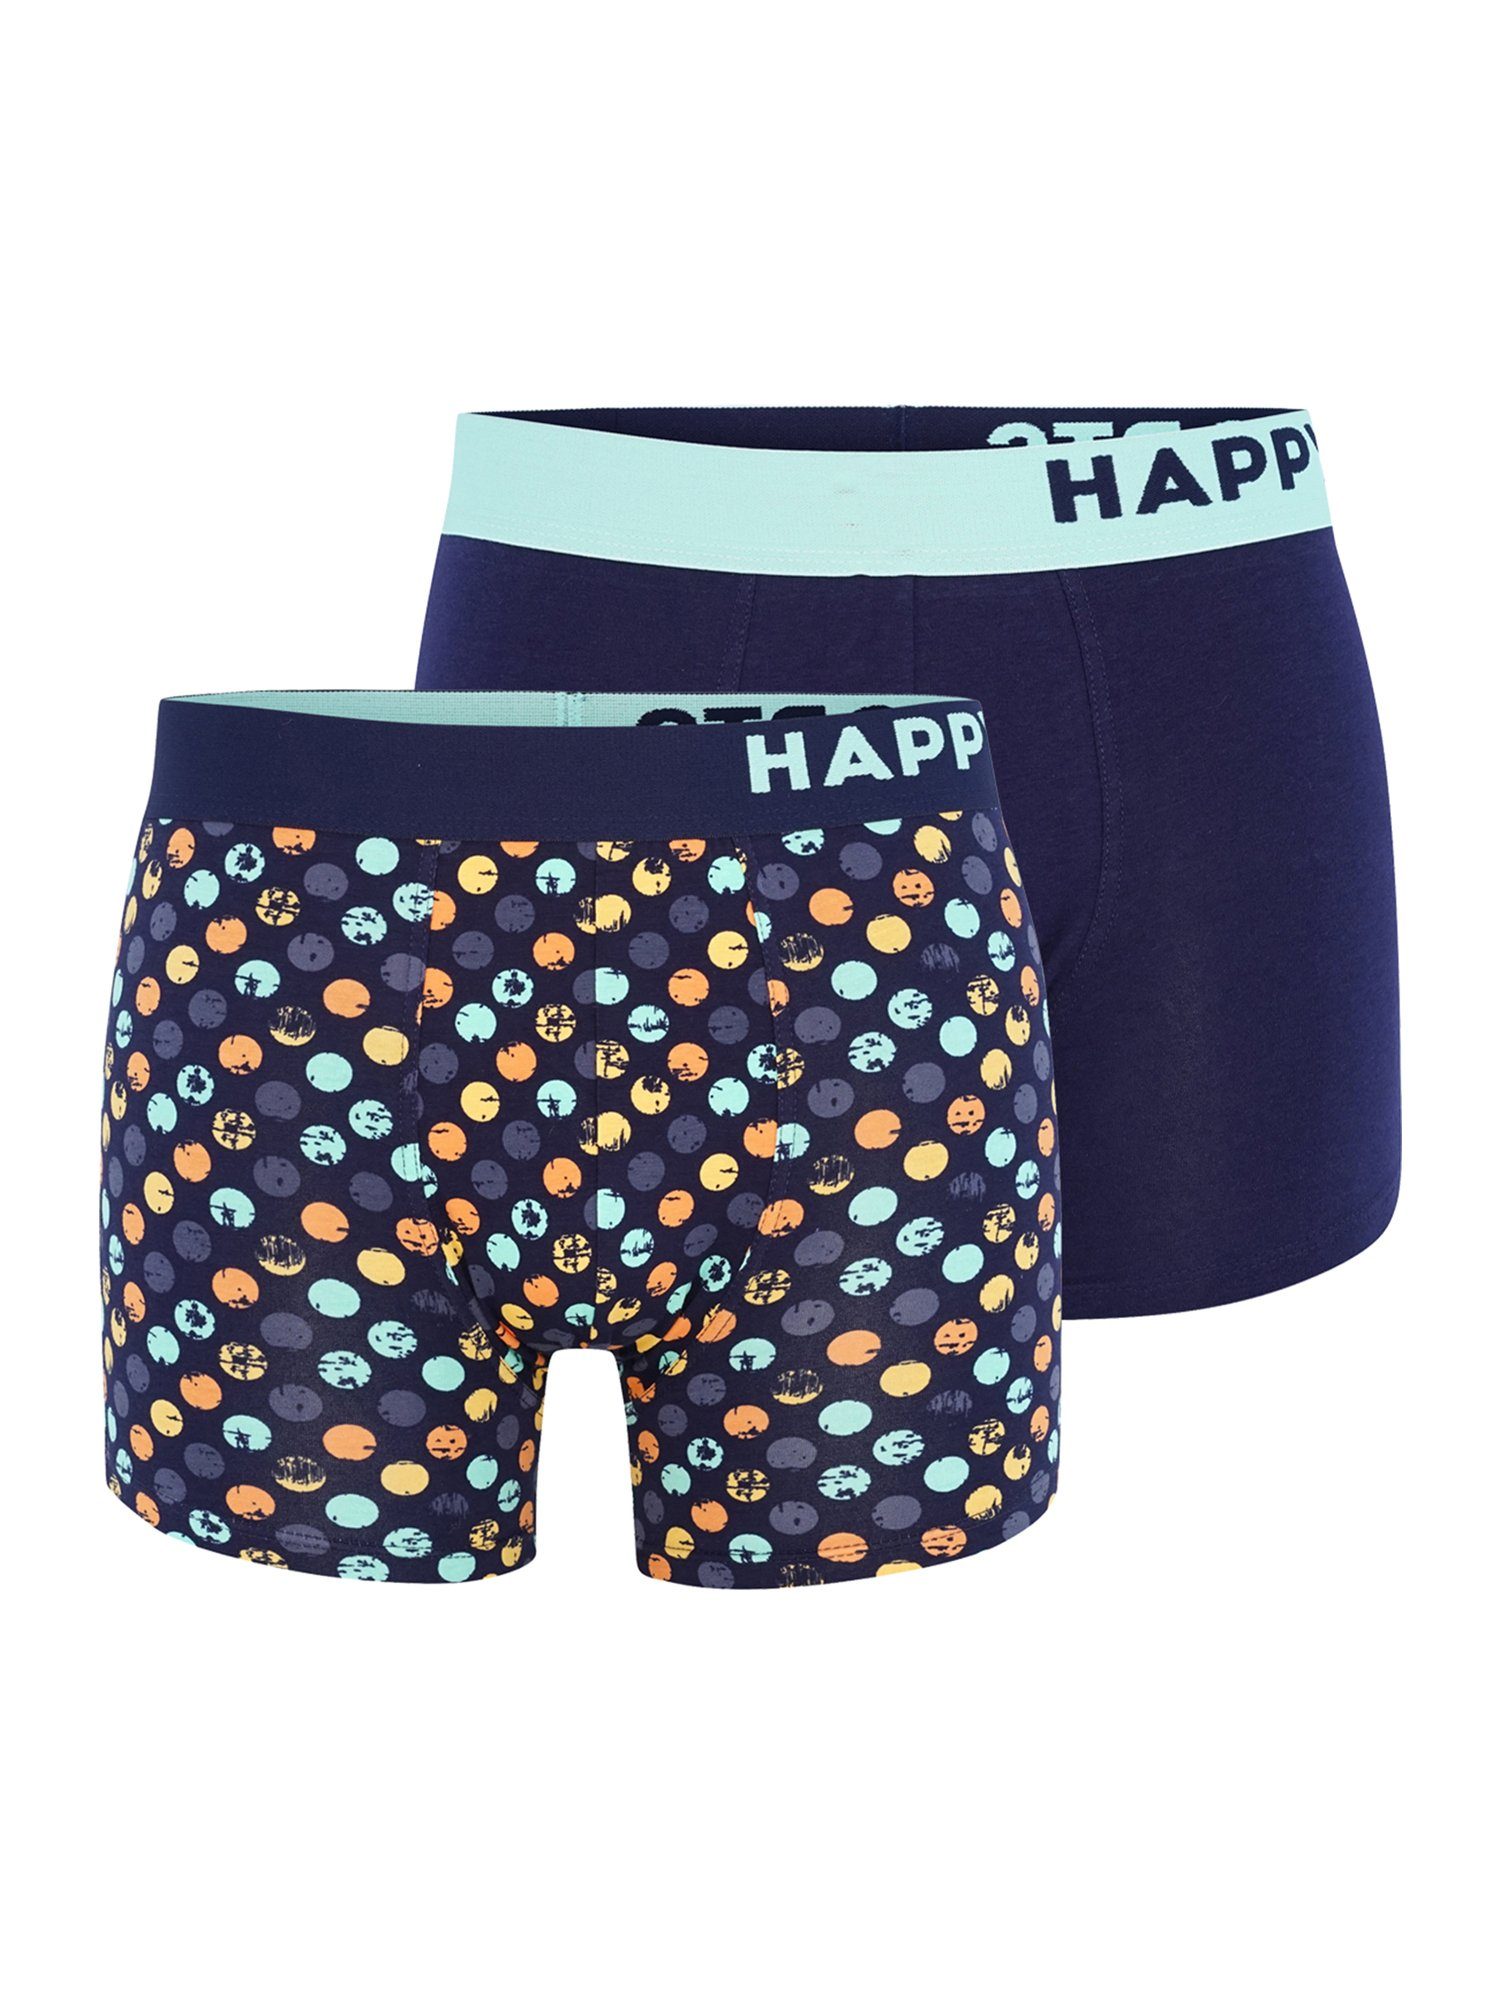 HAPPY SHORTS Retro Pants Motivprint Trunks Polka Dots